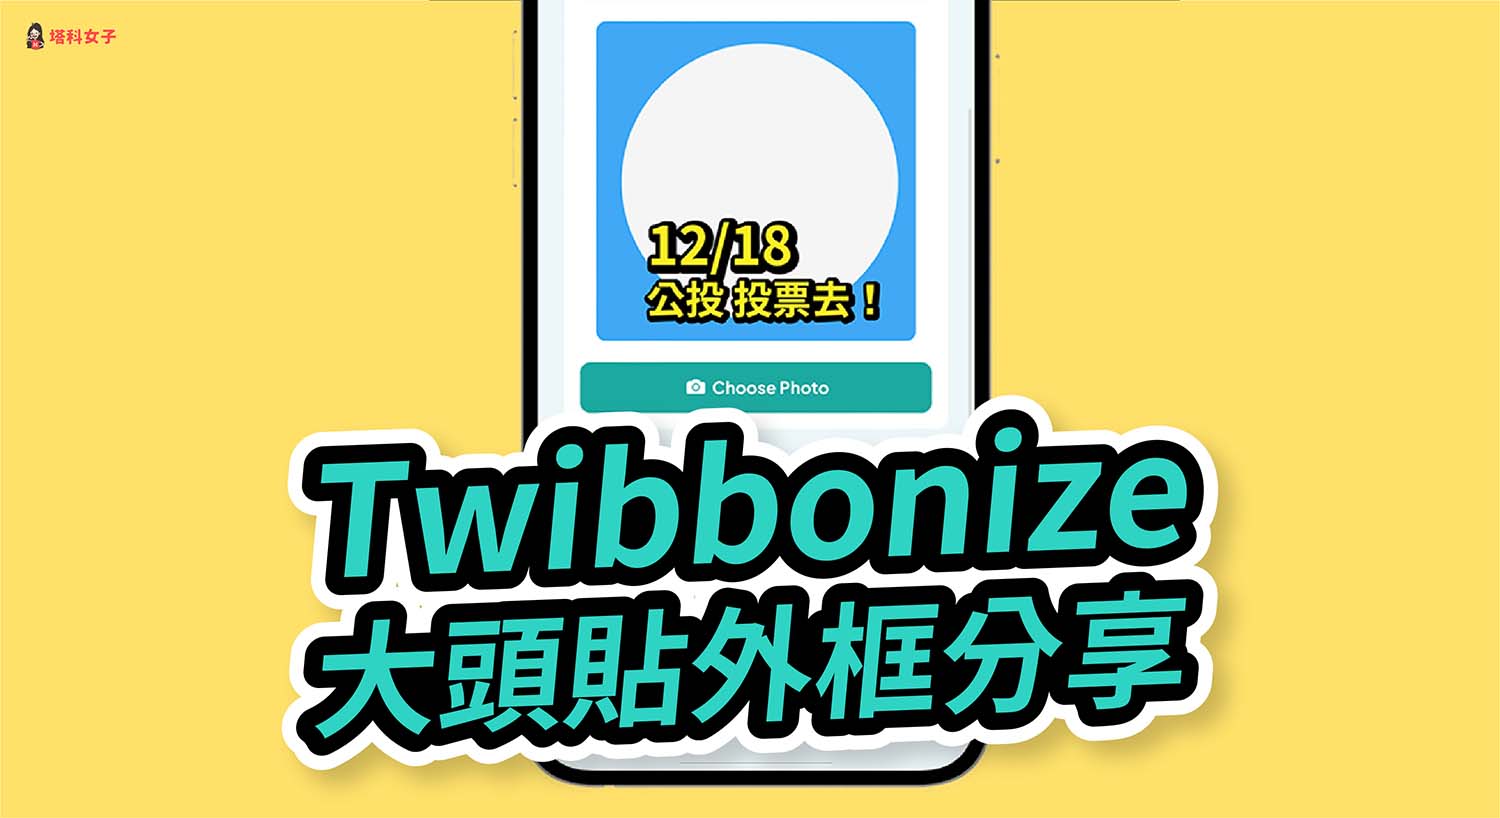 Twibbonize 製作並分享 FB 大頭貼特效框，讓其他用戶一鍵套用